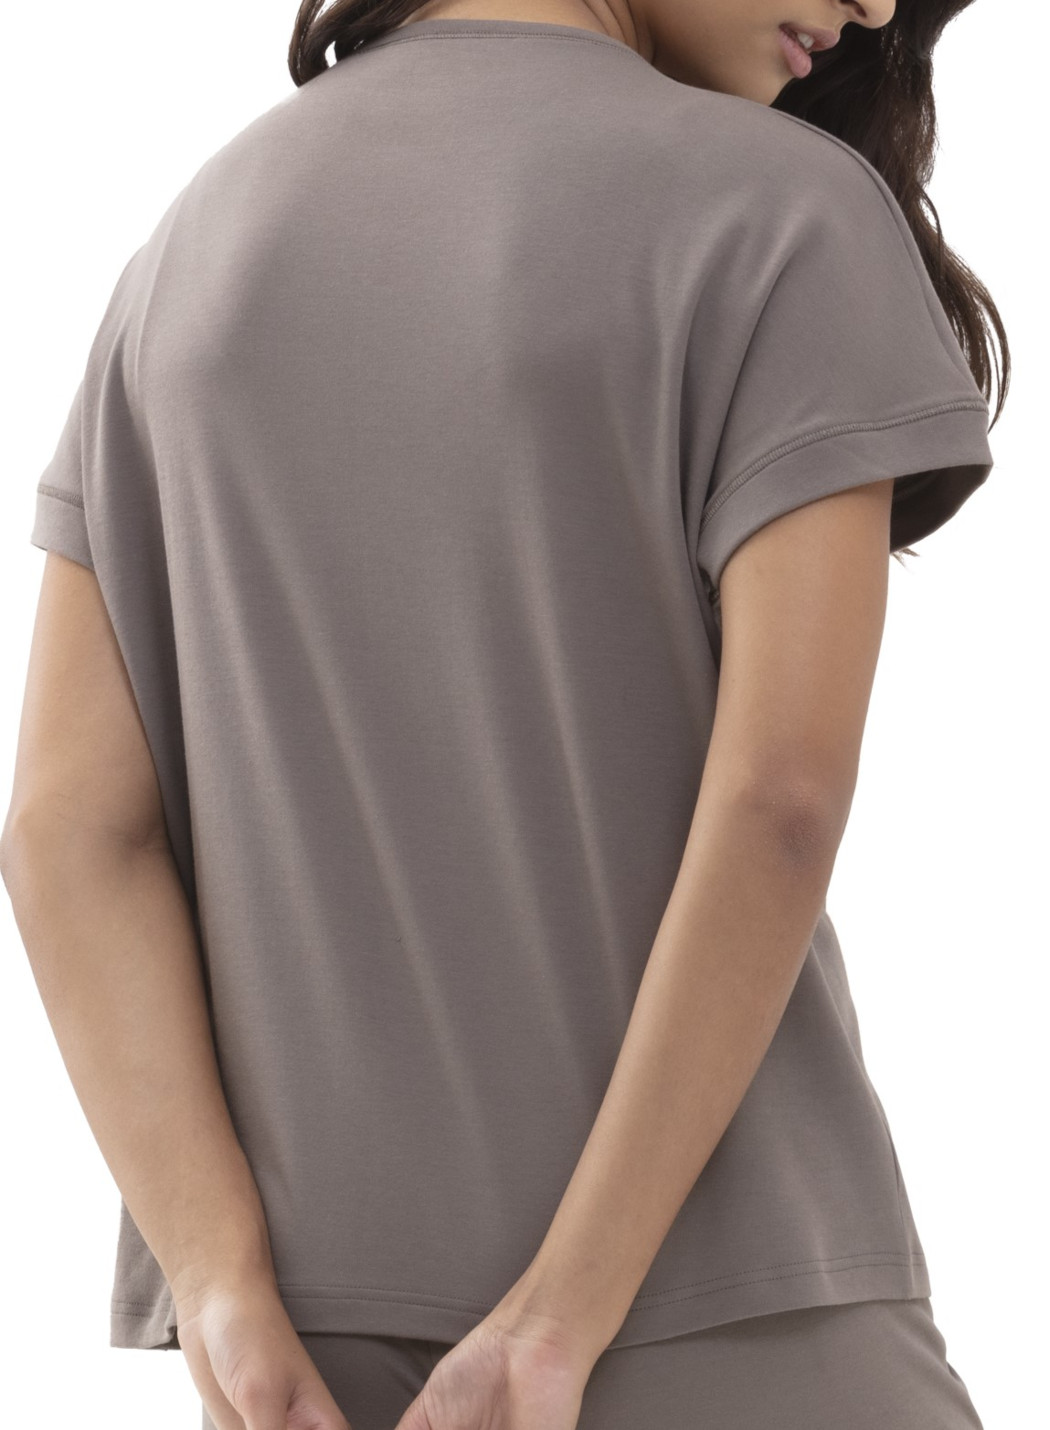 Mey Serie N8TEX 2.0 Damen Shirt kurzarm